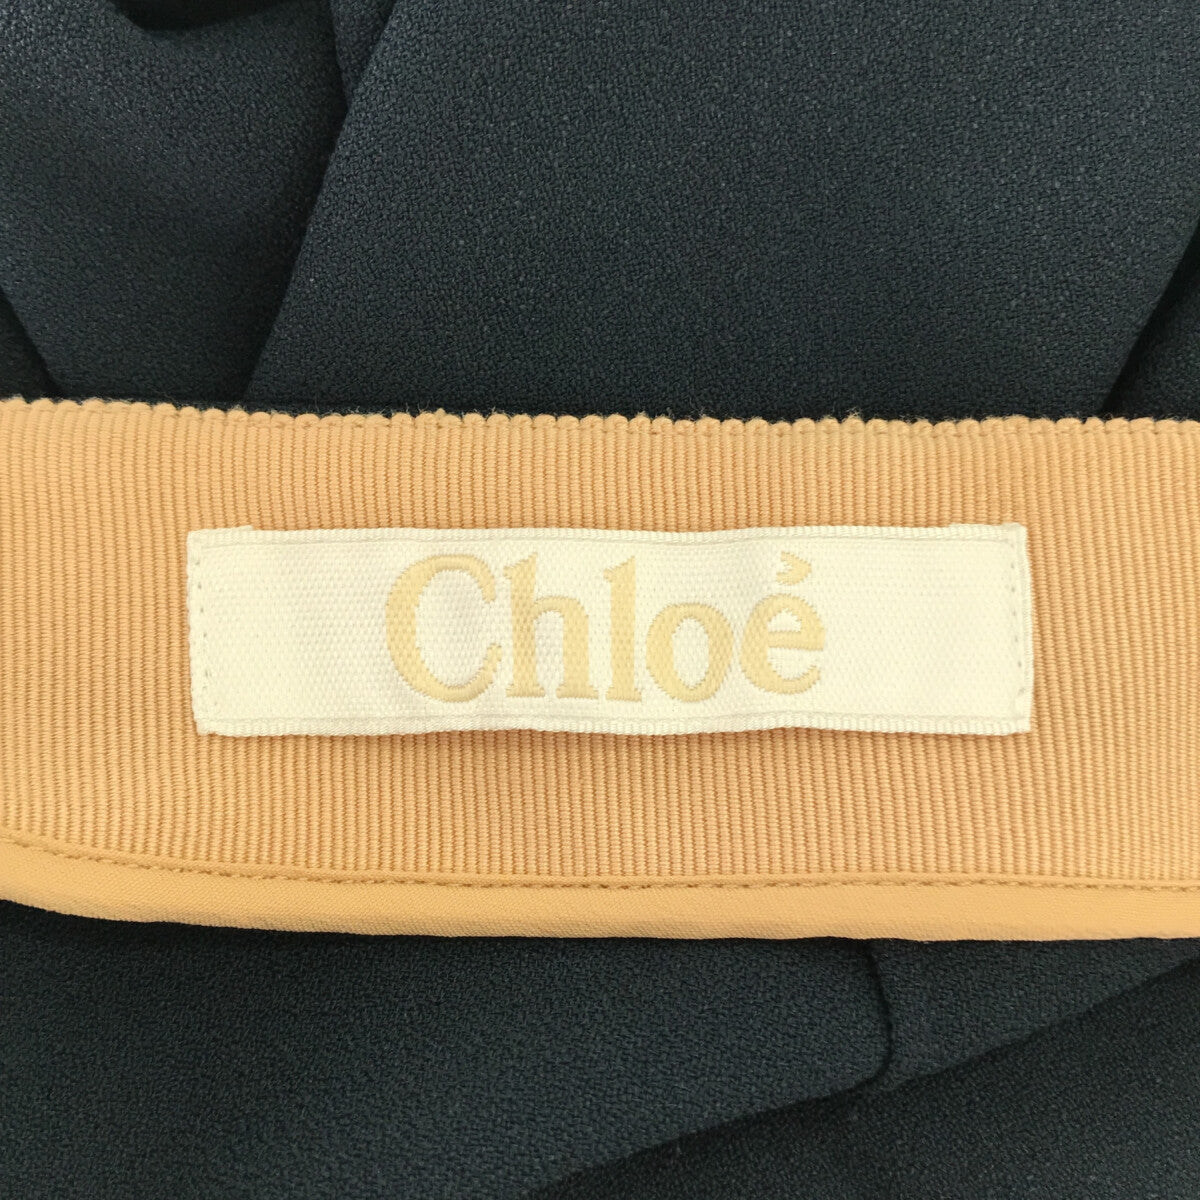 Chloe / クロエ | フリルデザイン フレアスカート | 36 | ネイビー | レディース